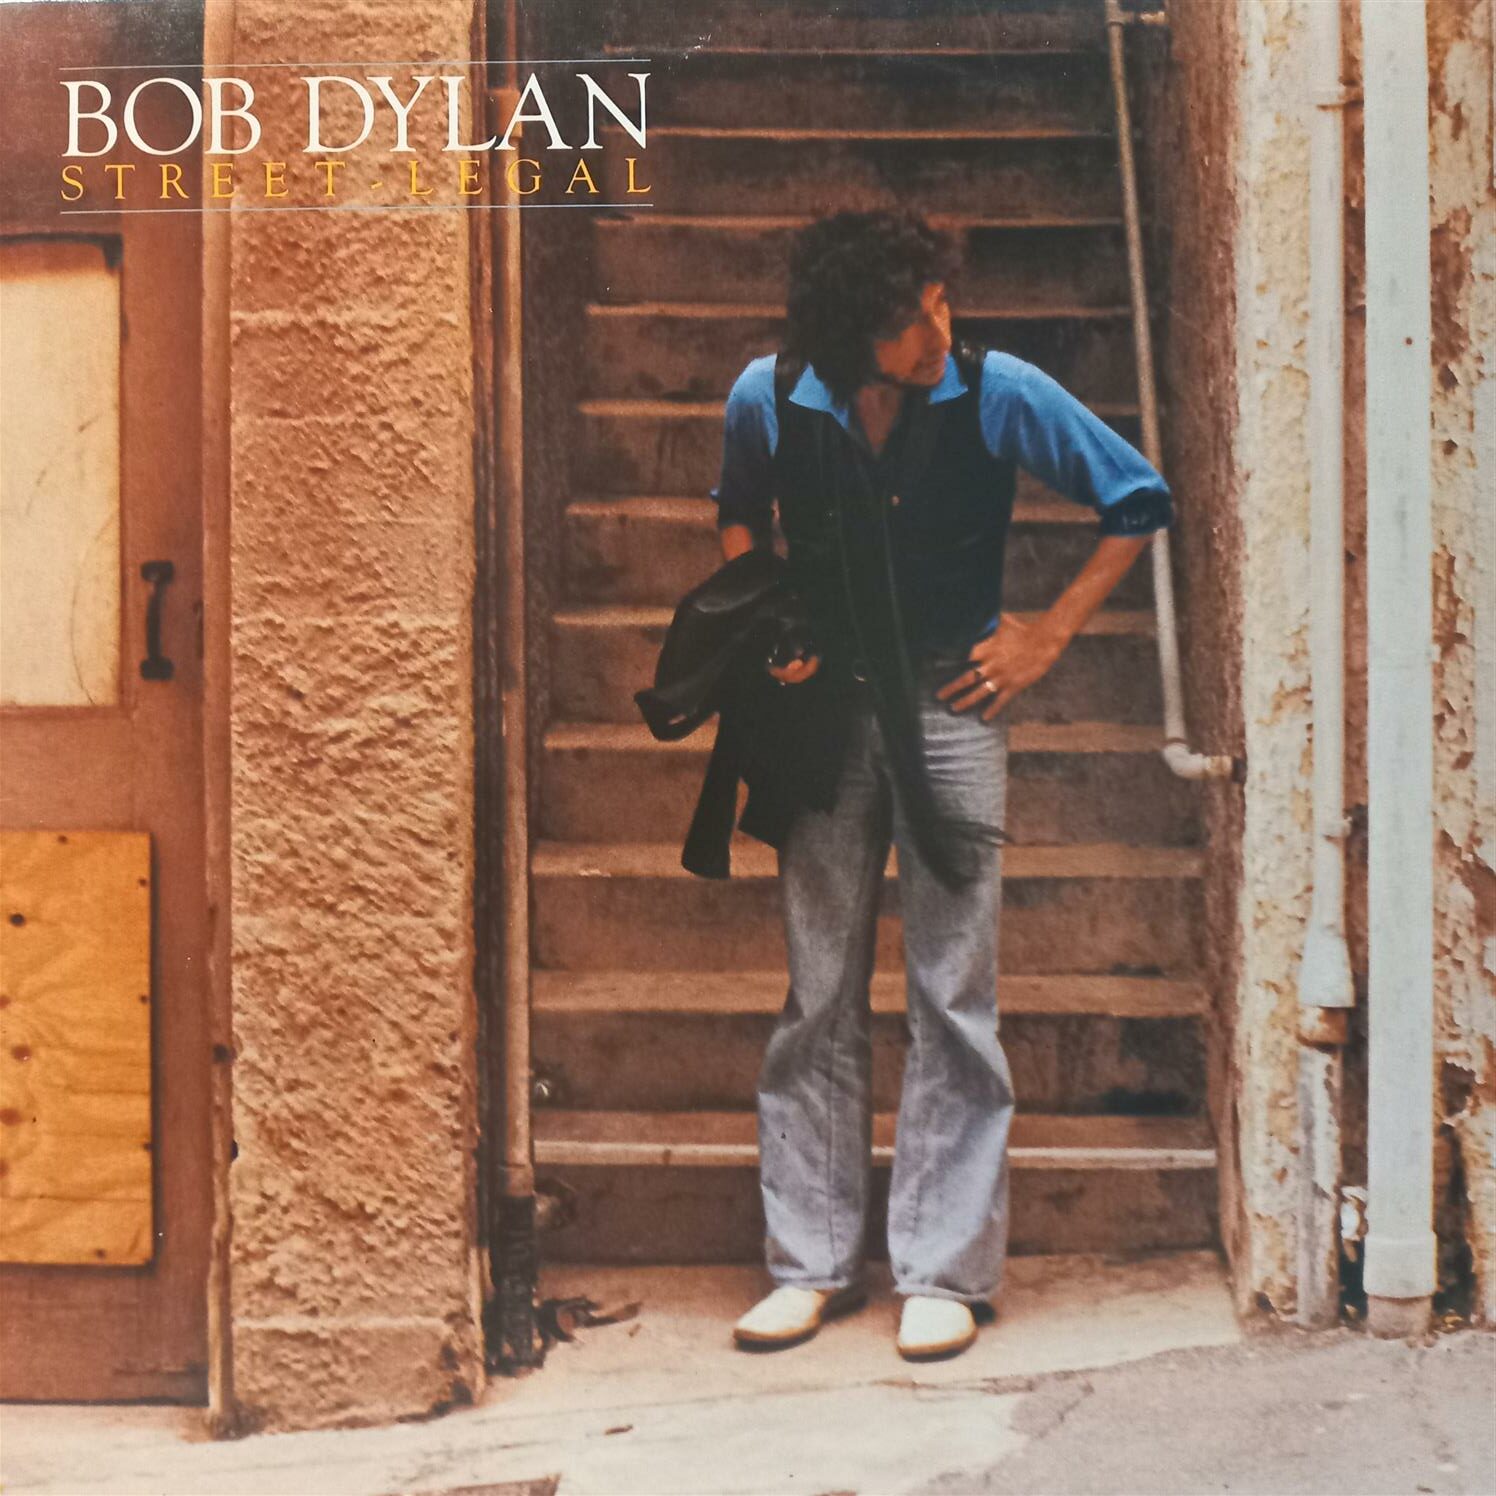 BOB DYLAN – STREET LEGAL ON